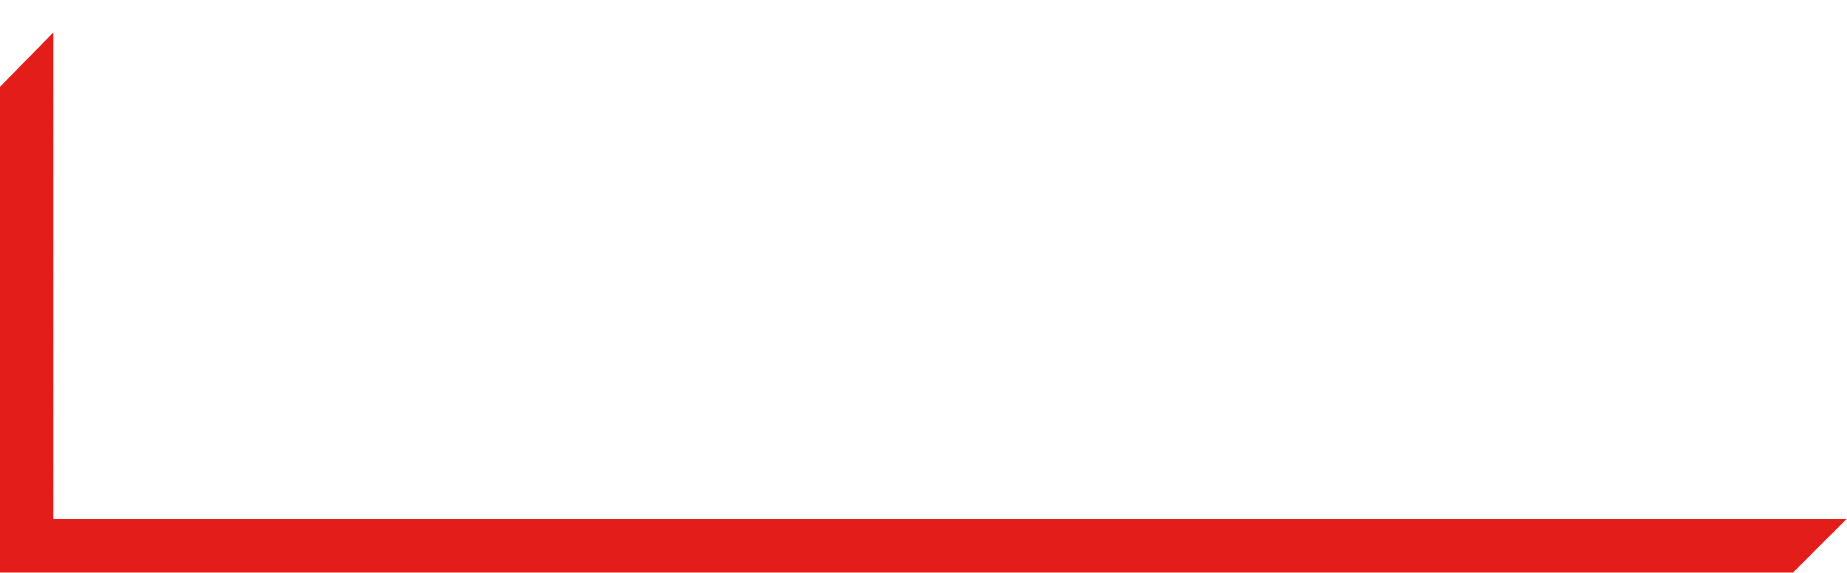 Burford Capital Logo groß für dunkle Hintergründe (transparentes PNG)